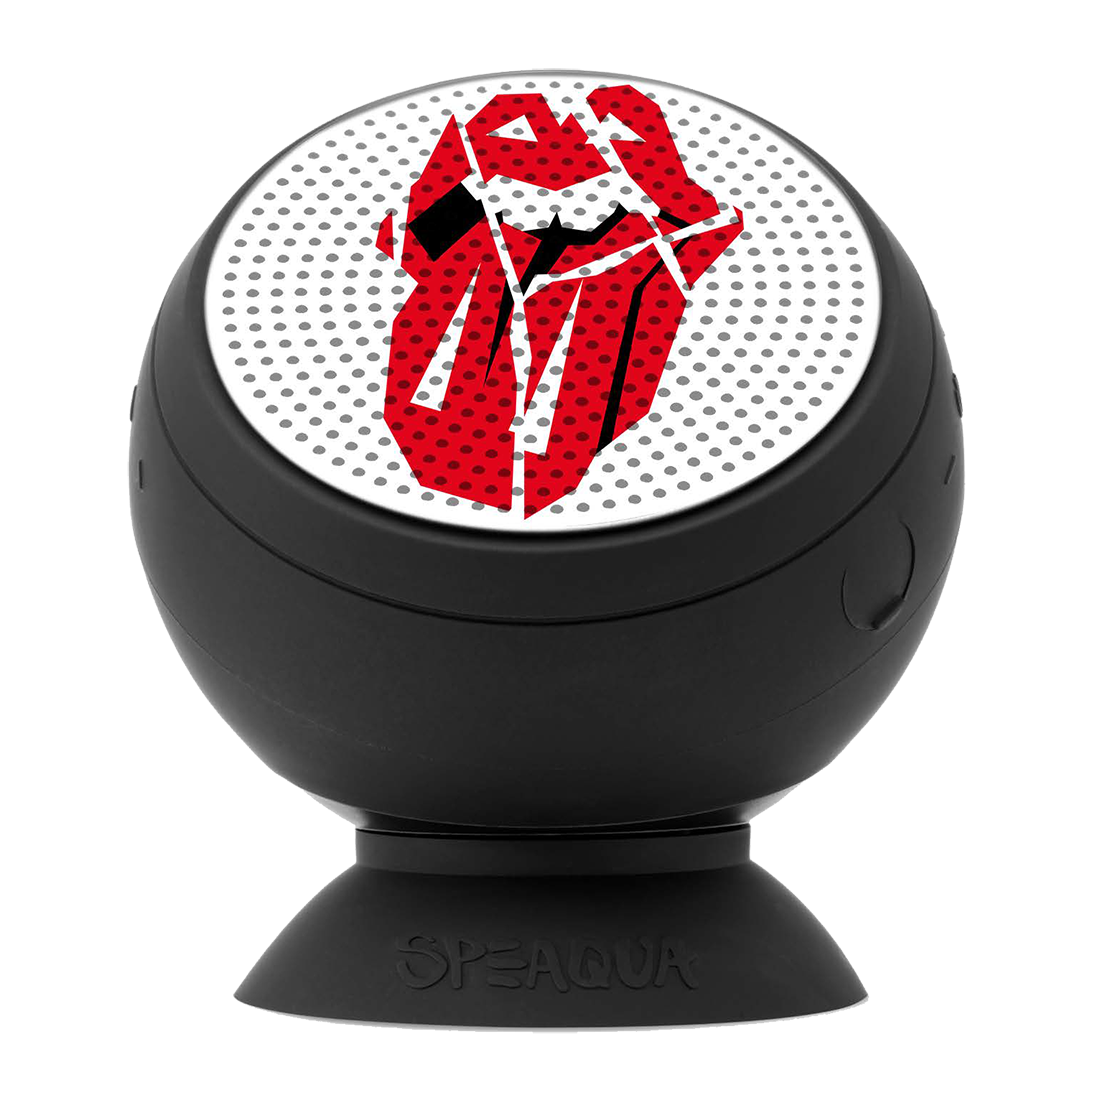 The Rolling Stones - Stones Barnacle Vibe 3.0 Speaqua